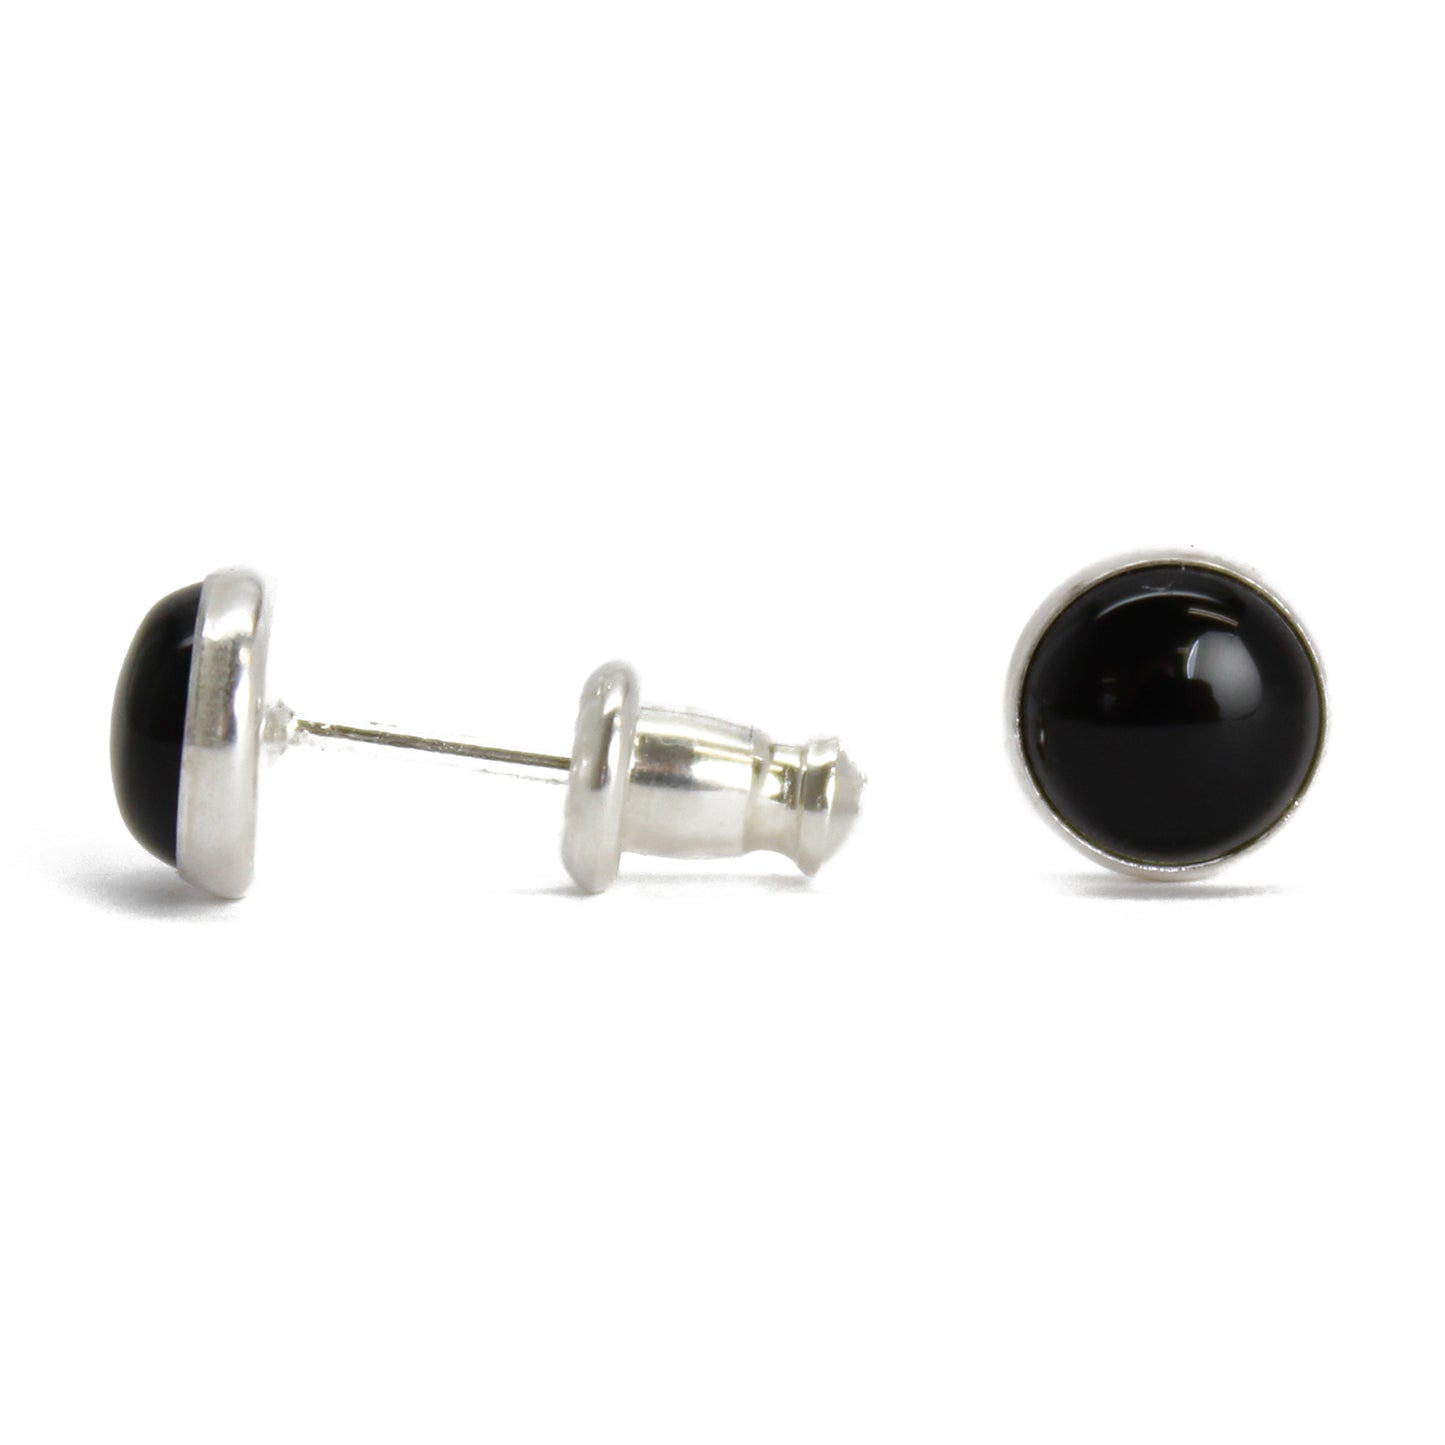 Black Onyx Stud Earrings, 6mm in Sterling Silver or Gold Fill